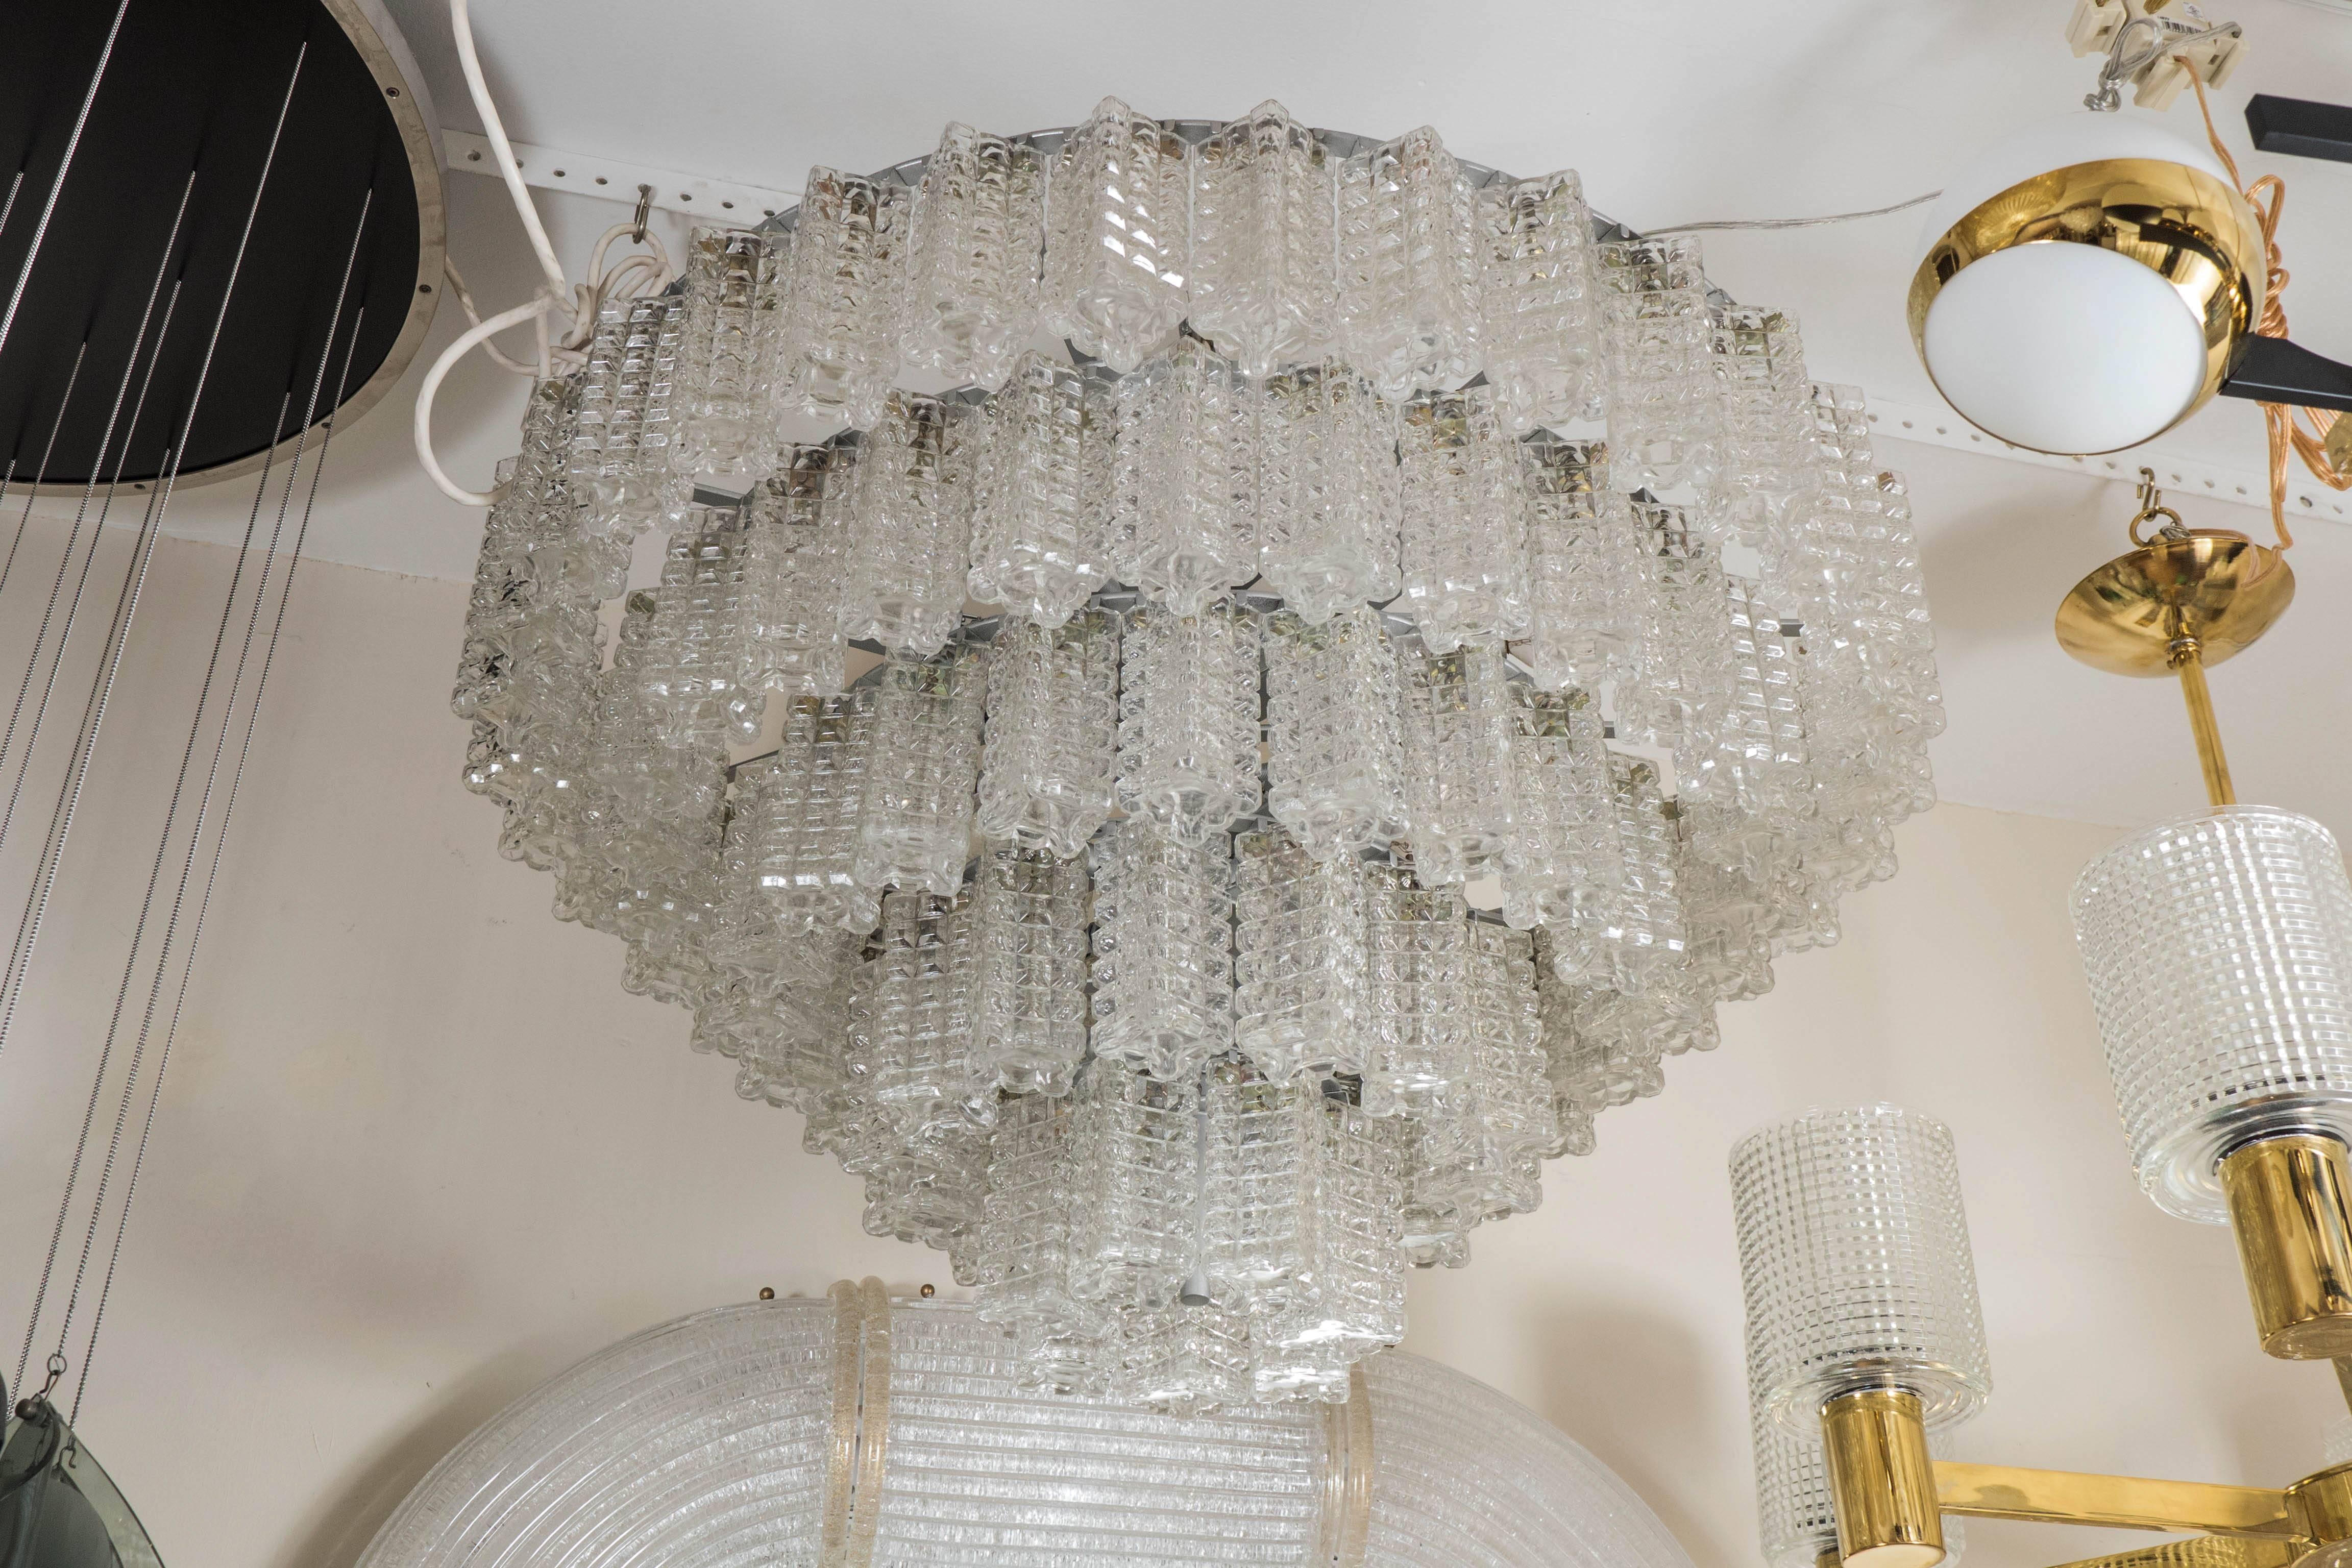 Circular, five-tier chandelier composed of textured glass rectangular elements.